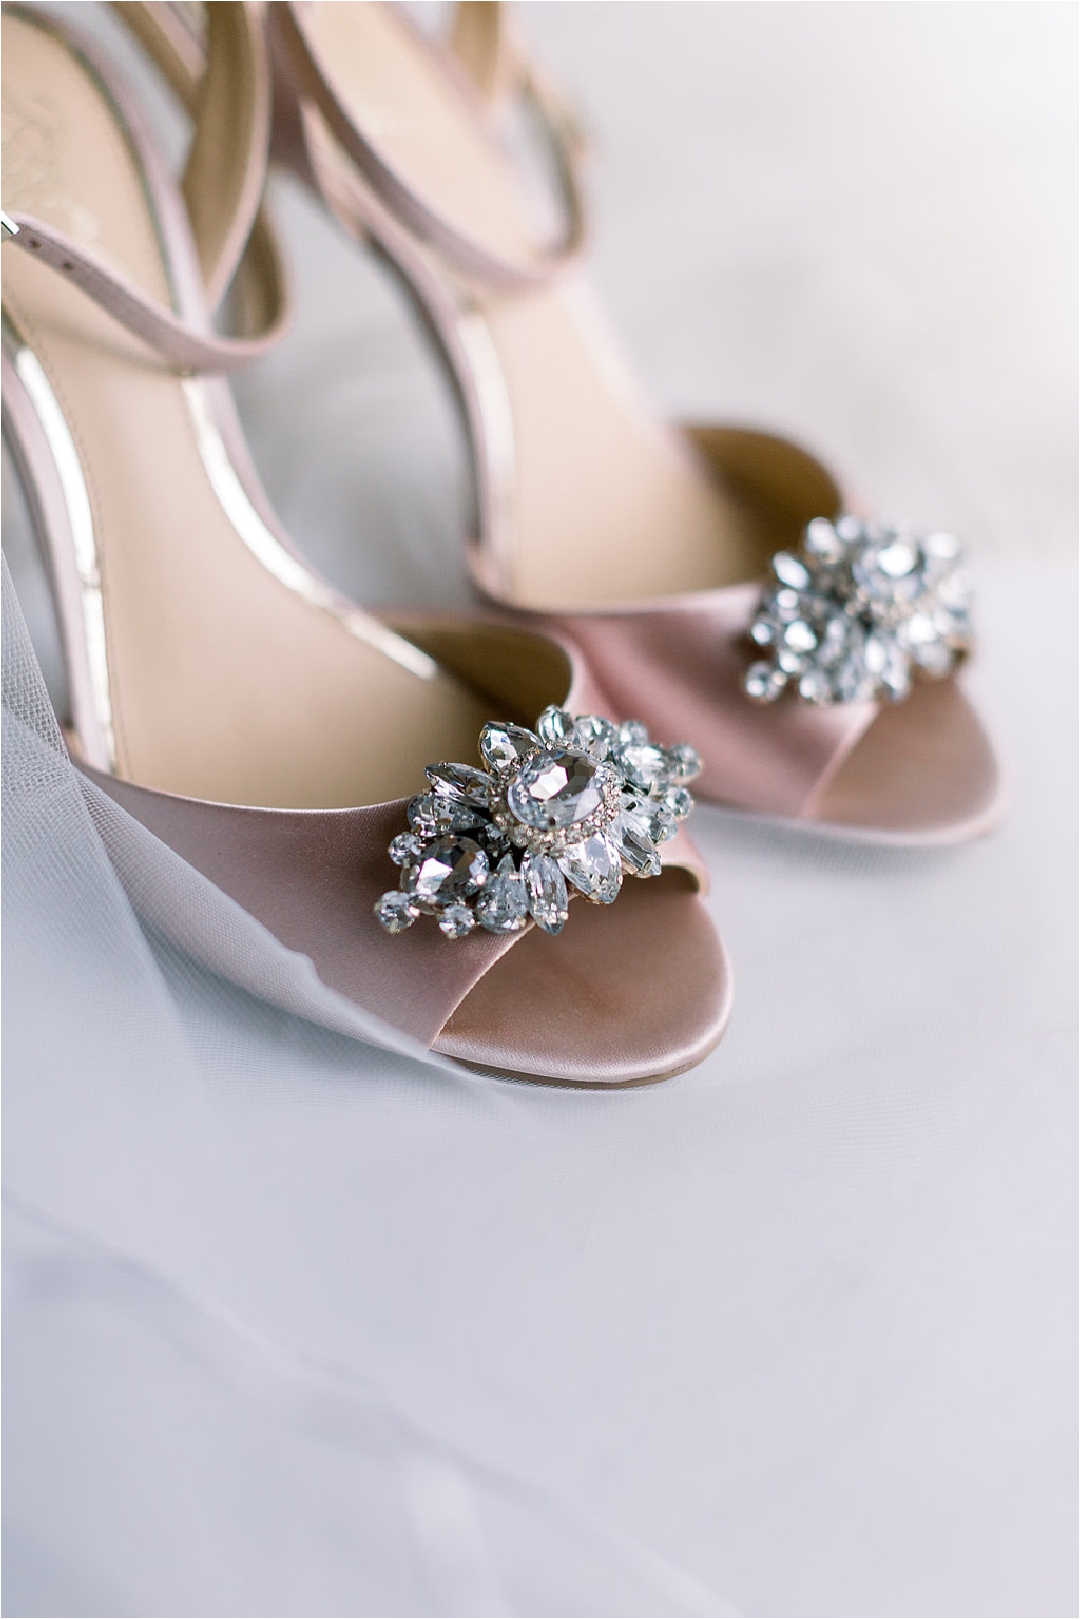 Blush wedding shoes_Photos by Leigh Wolfe, Atlanta's top wedding photographer